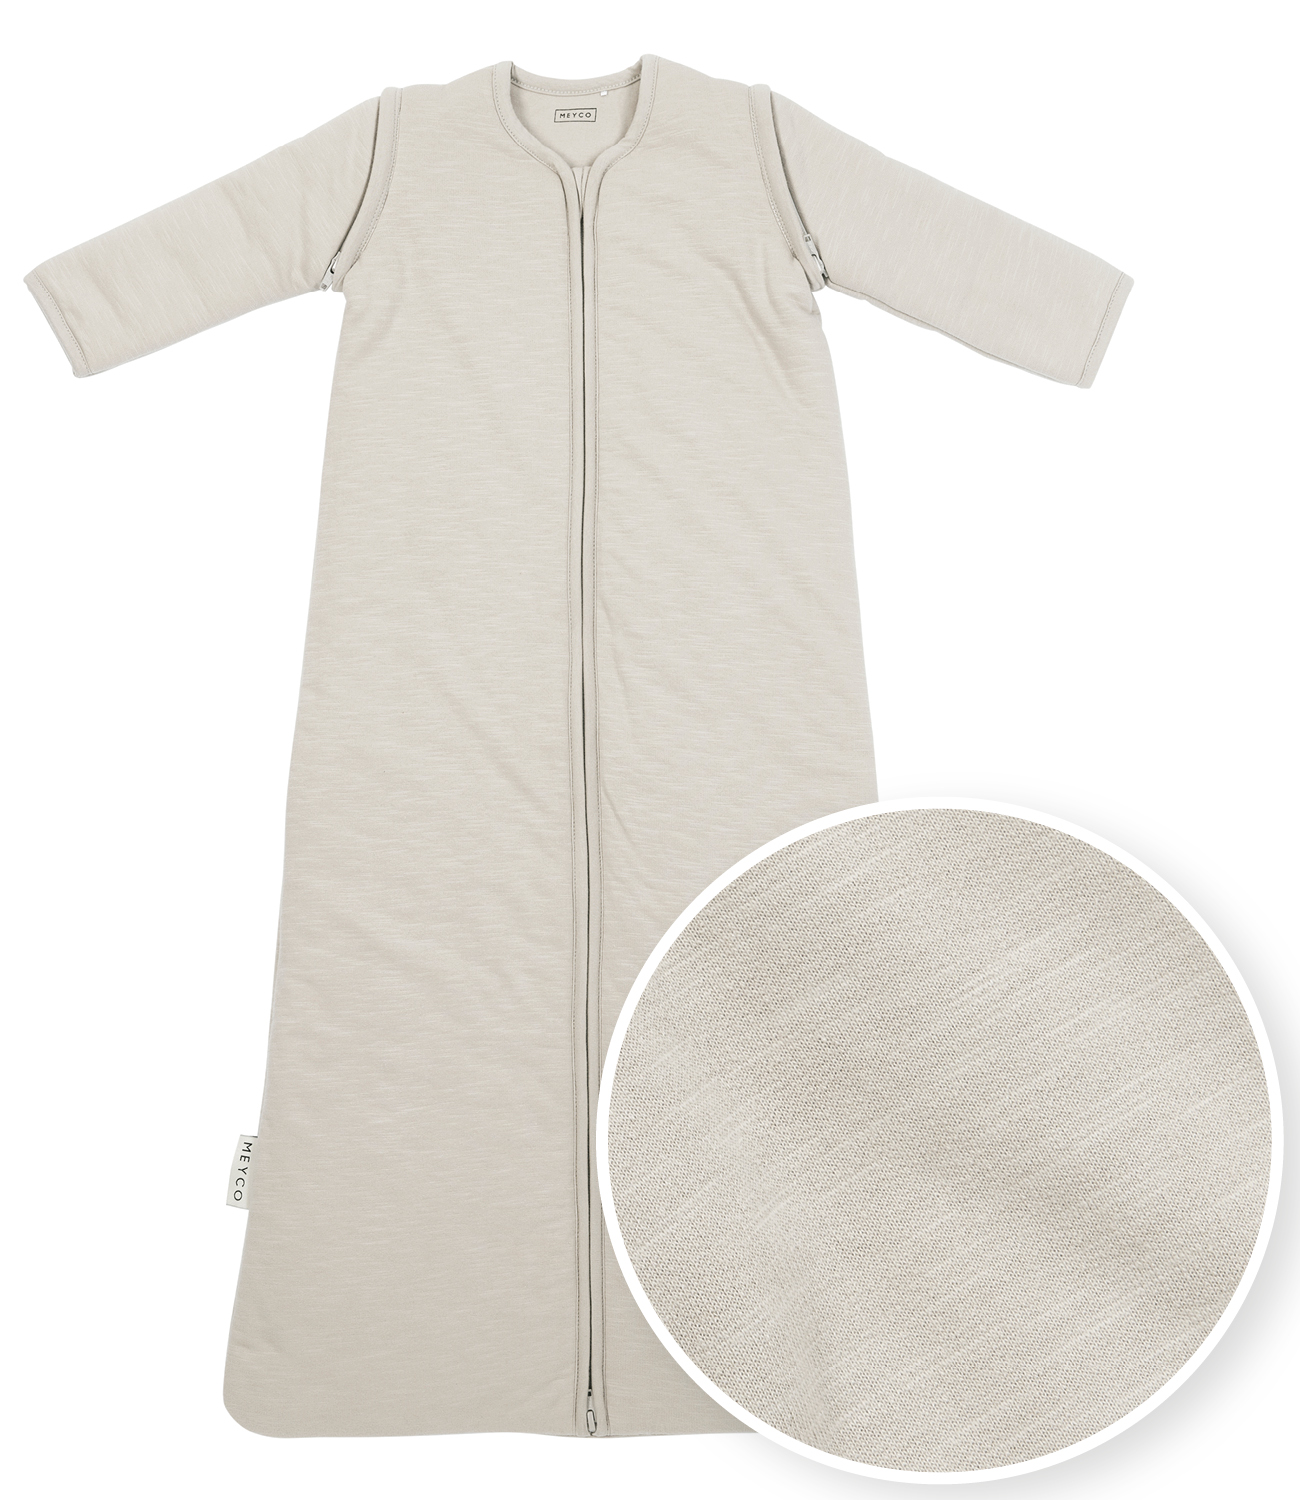 Baby sleeping bag with detachable sleeves Slub - greige - 70cm